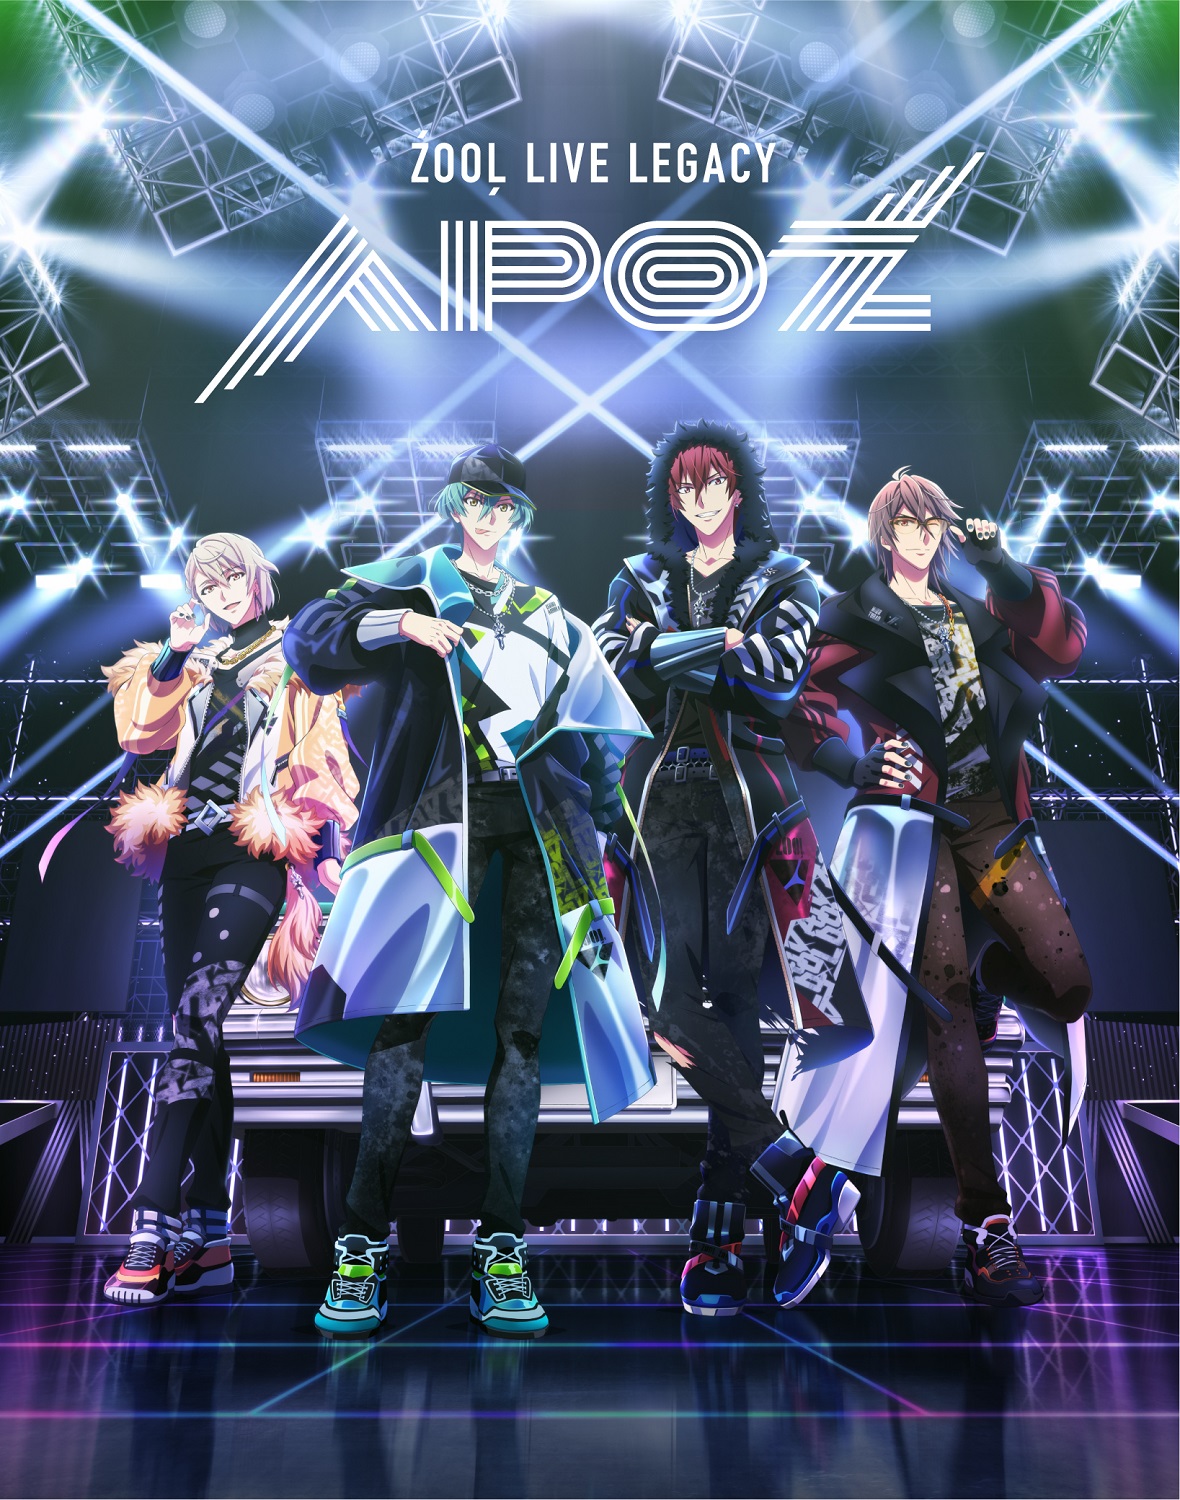 ŹOOĻ LIVE LEGACY “APOŹ”【Blu-ray BOX –Limited Edition-】 | アイド 